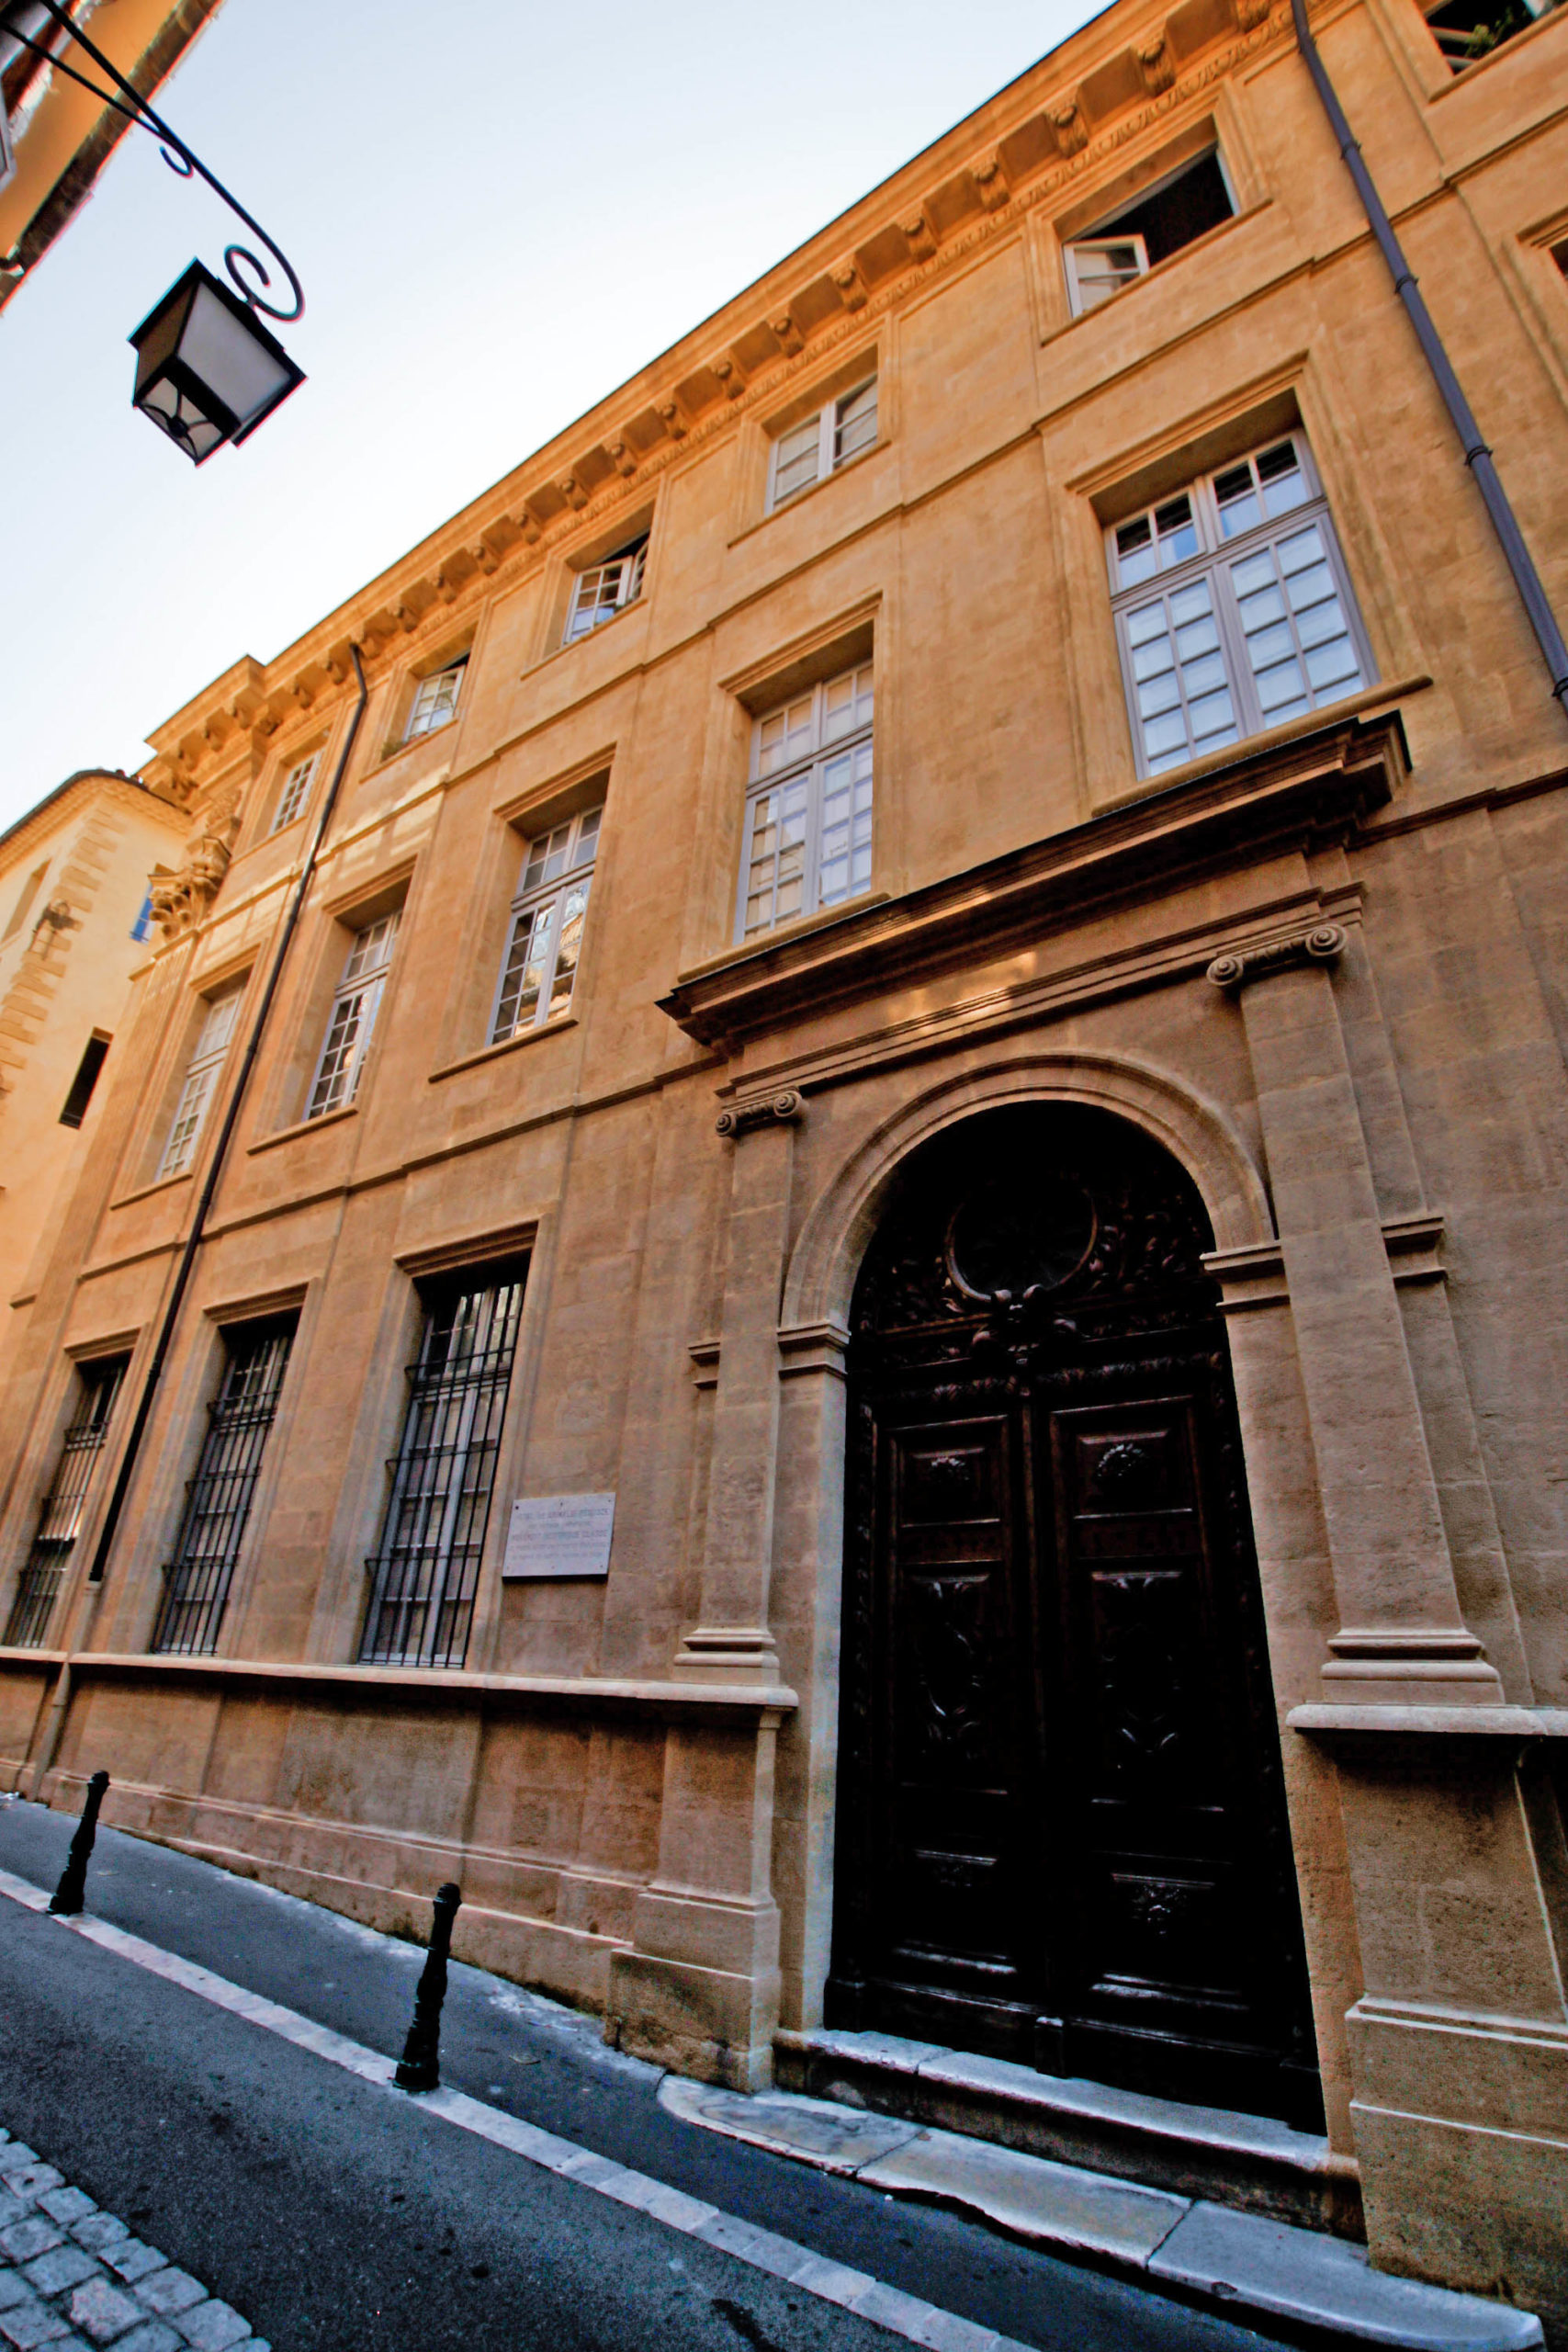 Hôtel de Grimaldi Regusse © Lsmpascal - licence [CC BY-SA 3.0] from Wikimedia Commons